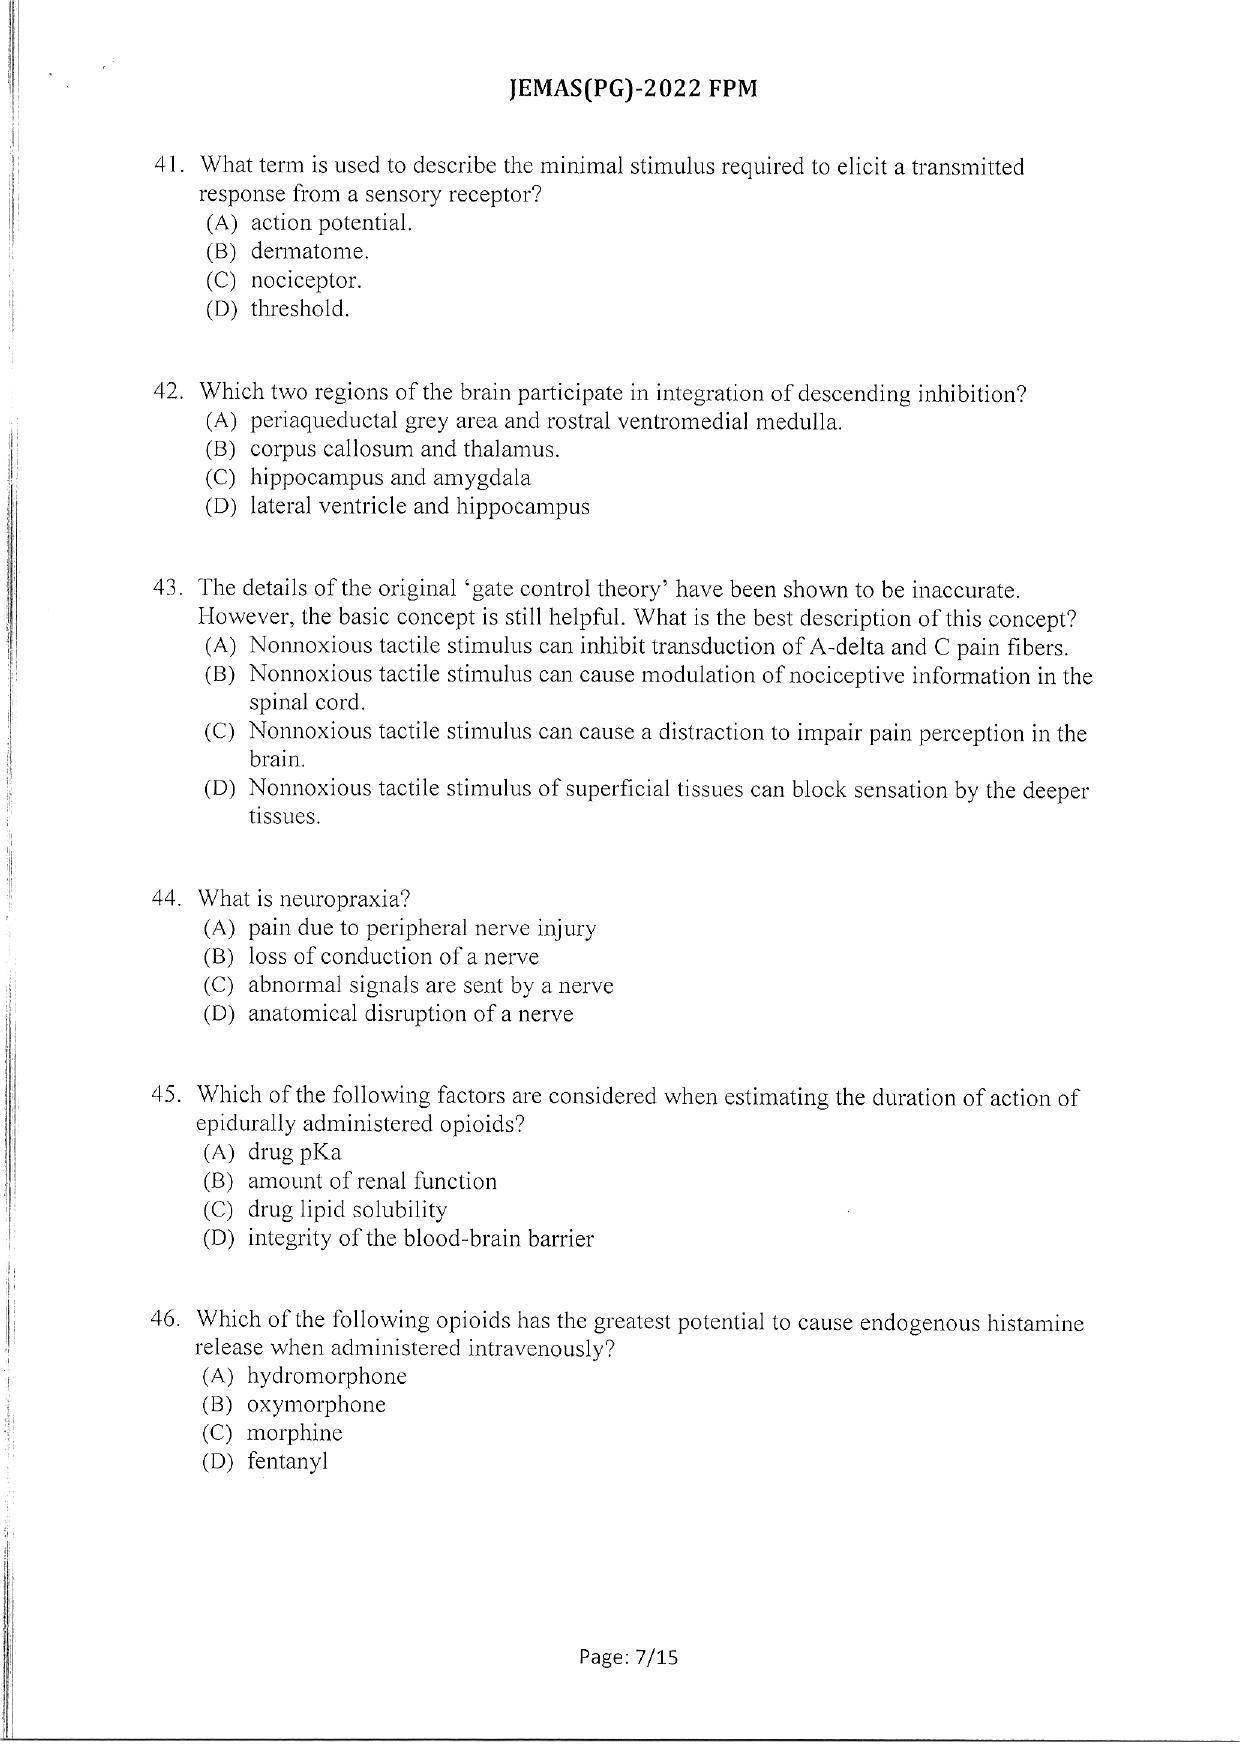 WBJEEB JEMAS (PG) 2022 FPM Question Paper - Page 9